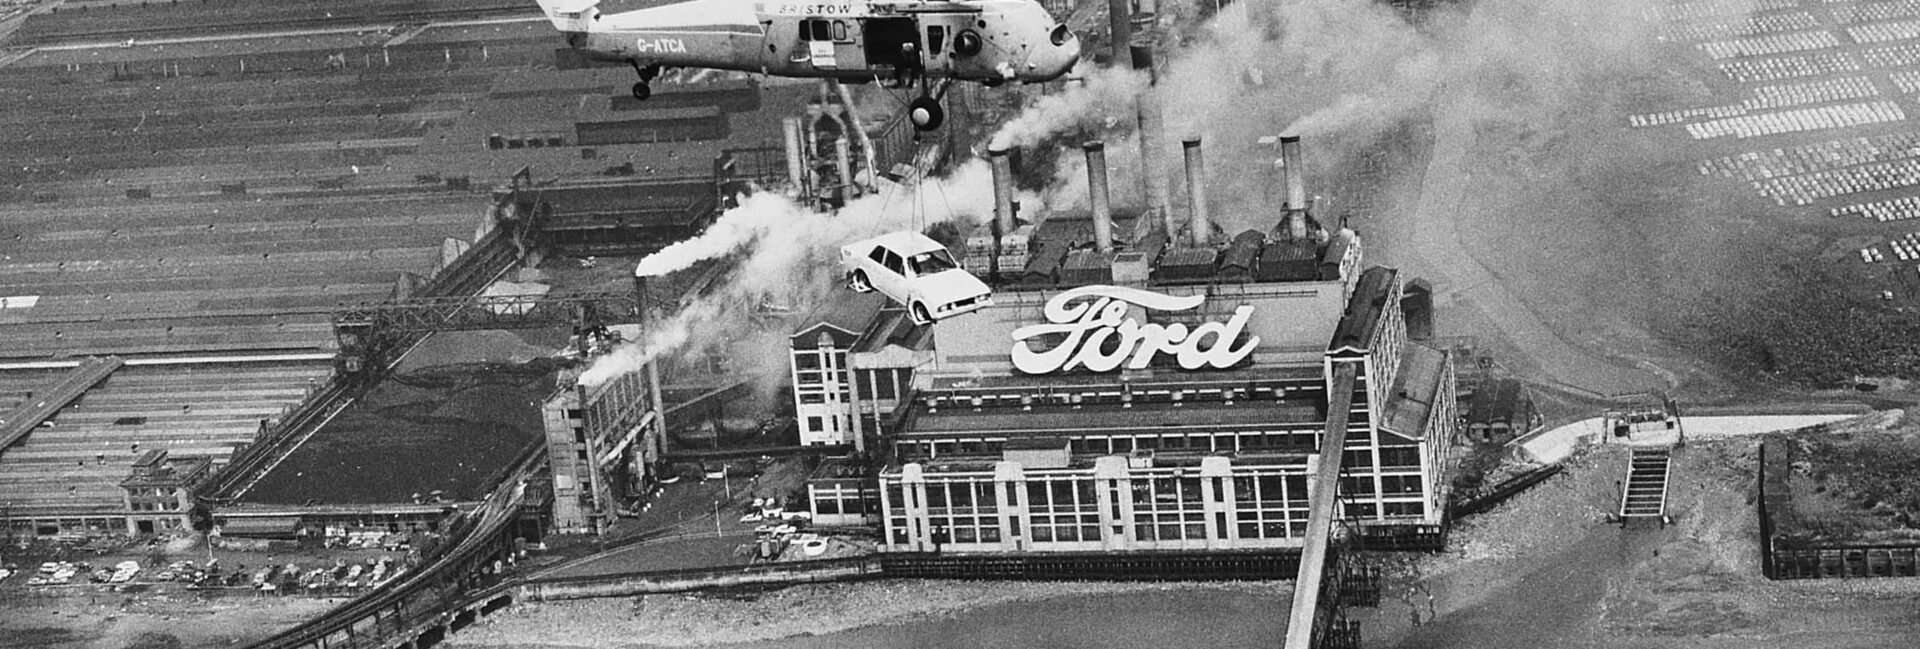 Az anglilai Ford-gyár 1970-ben